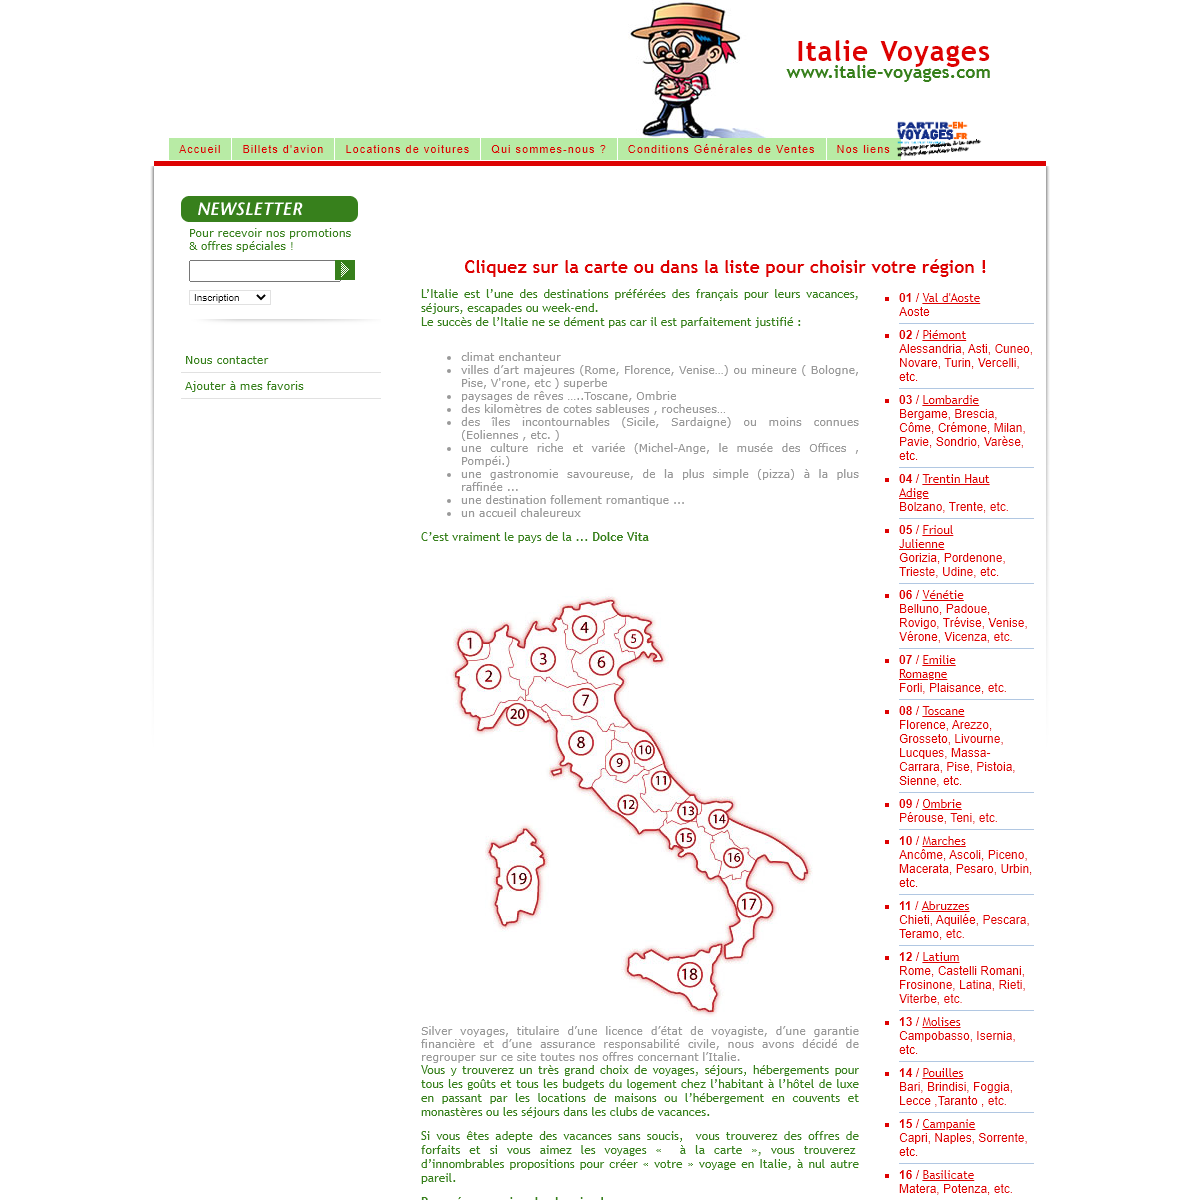 A complete backup of italie-voyages.com